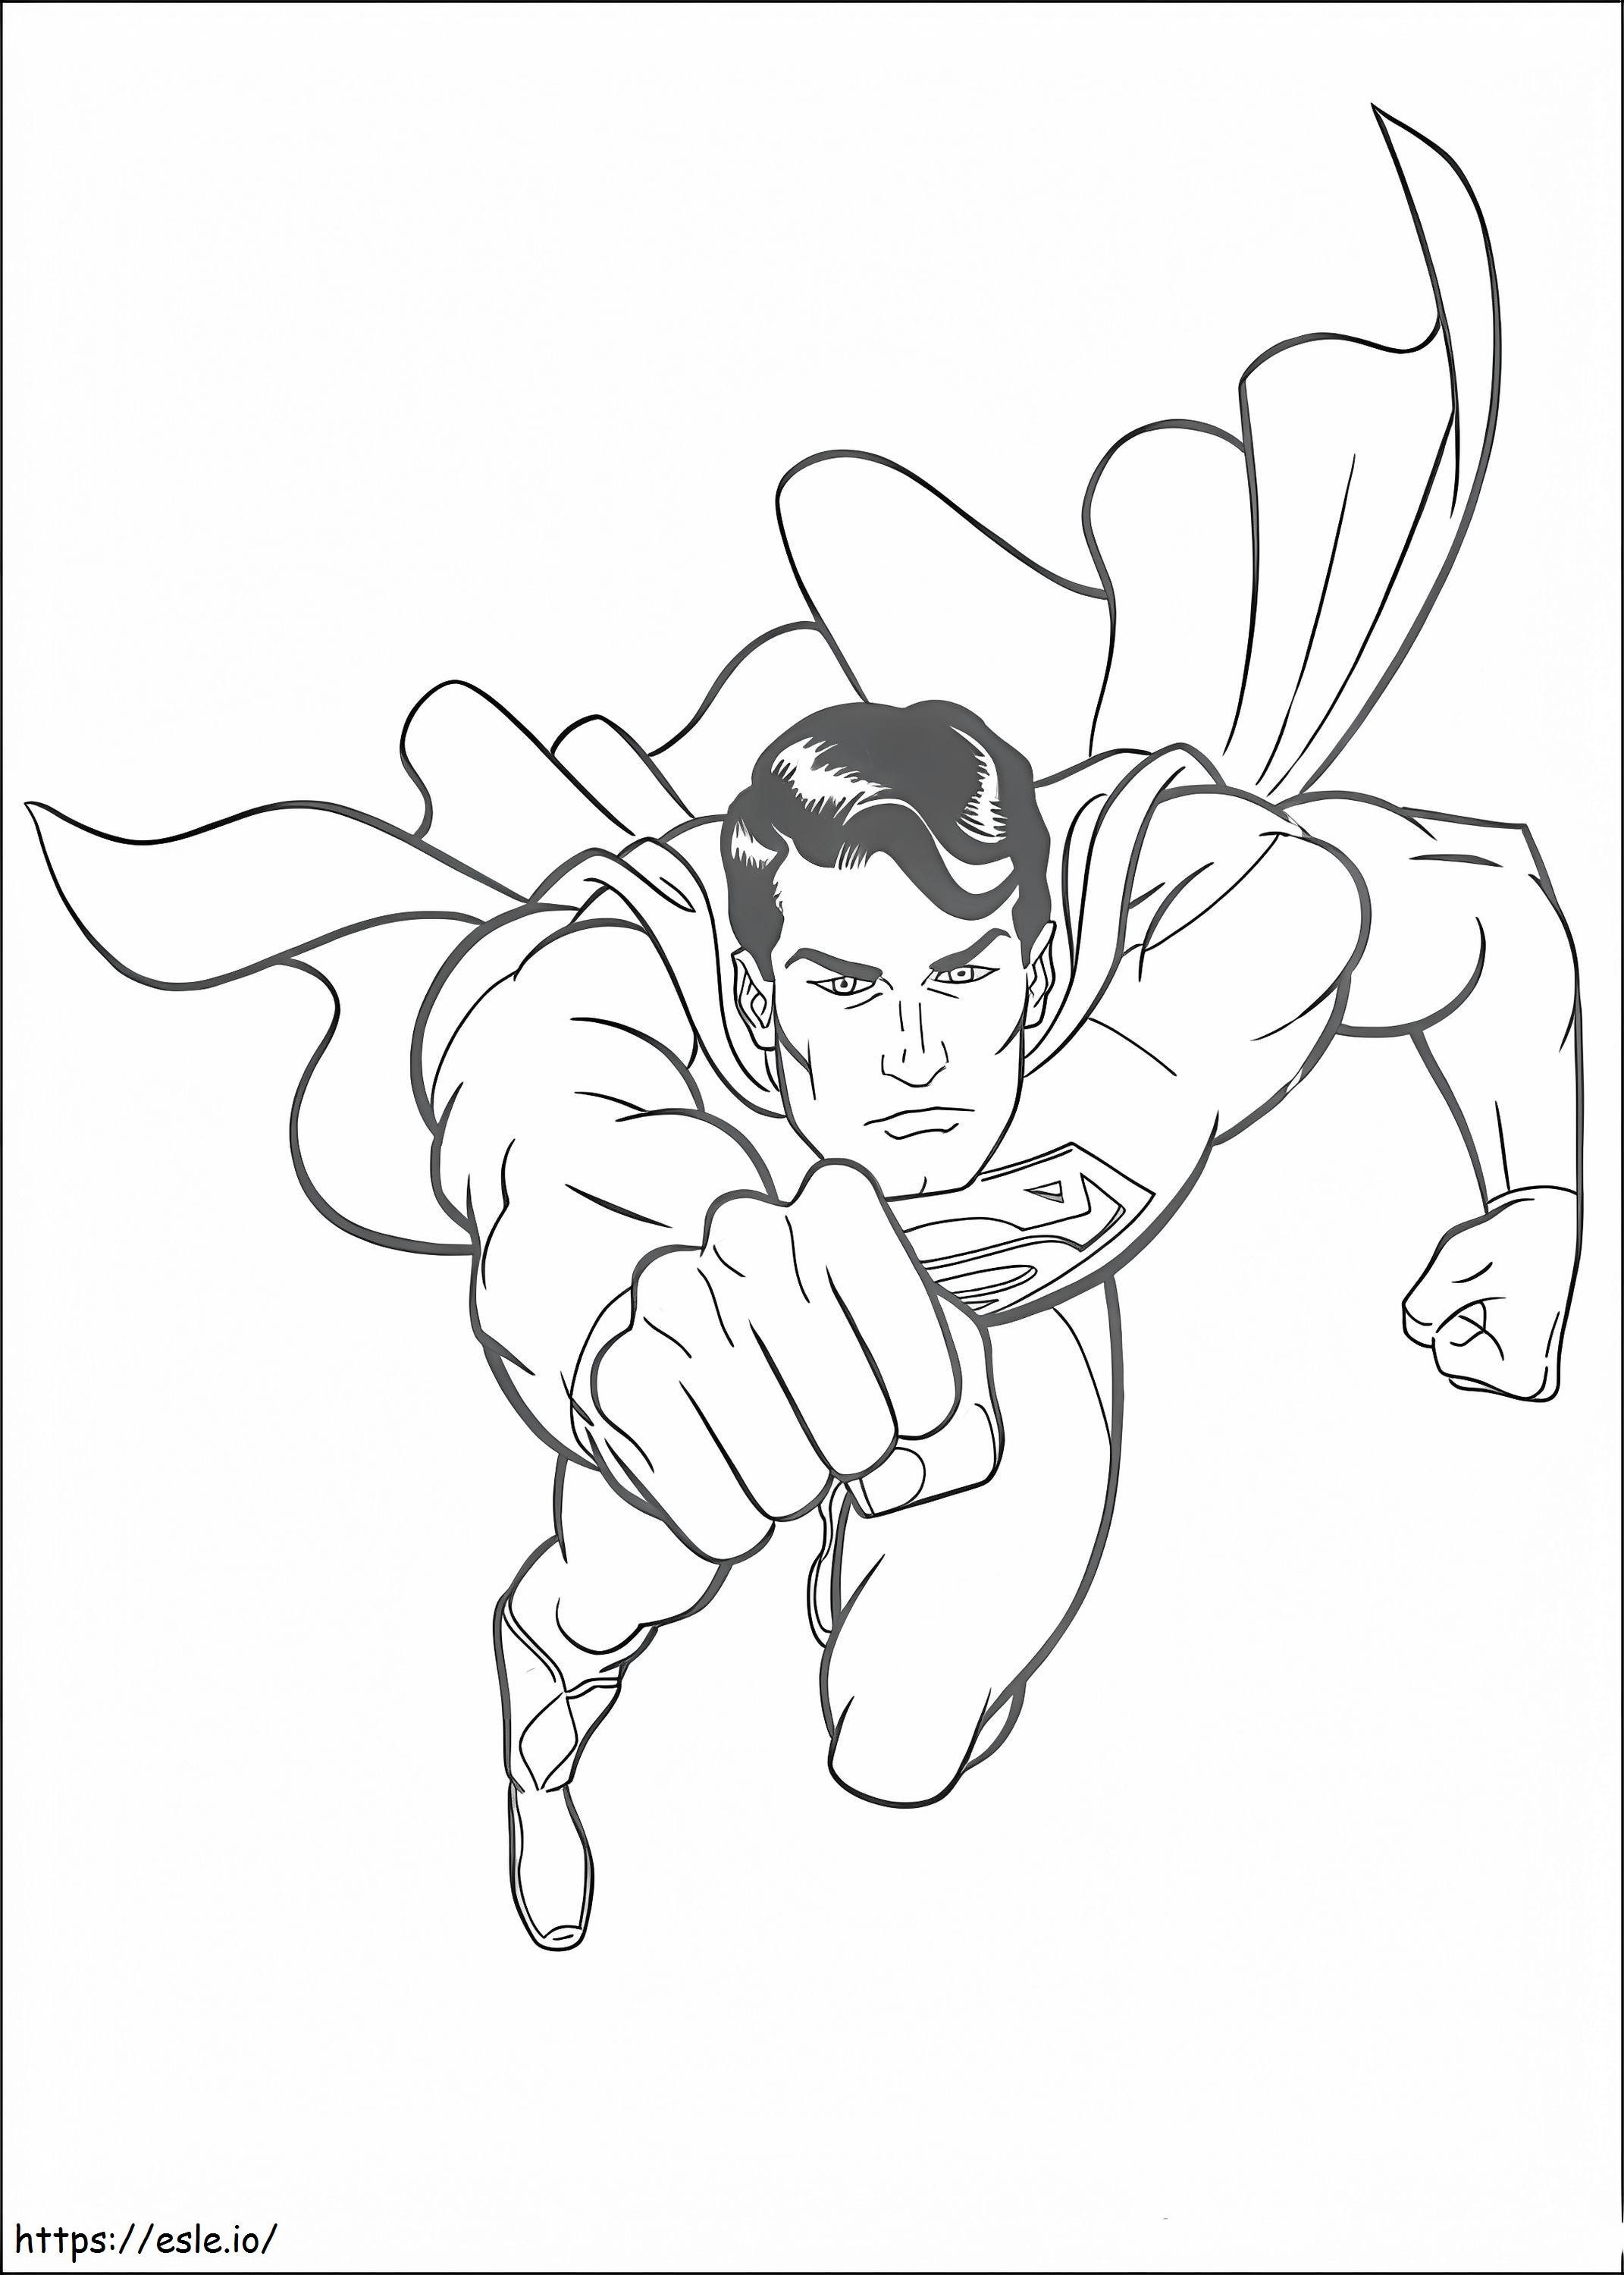 Printable Superman coloring page